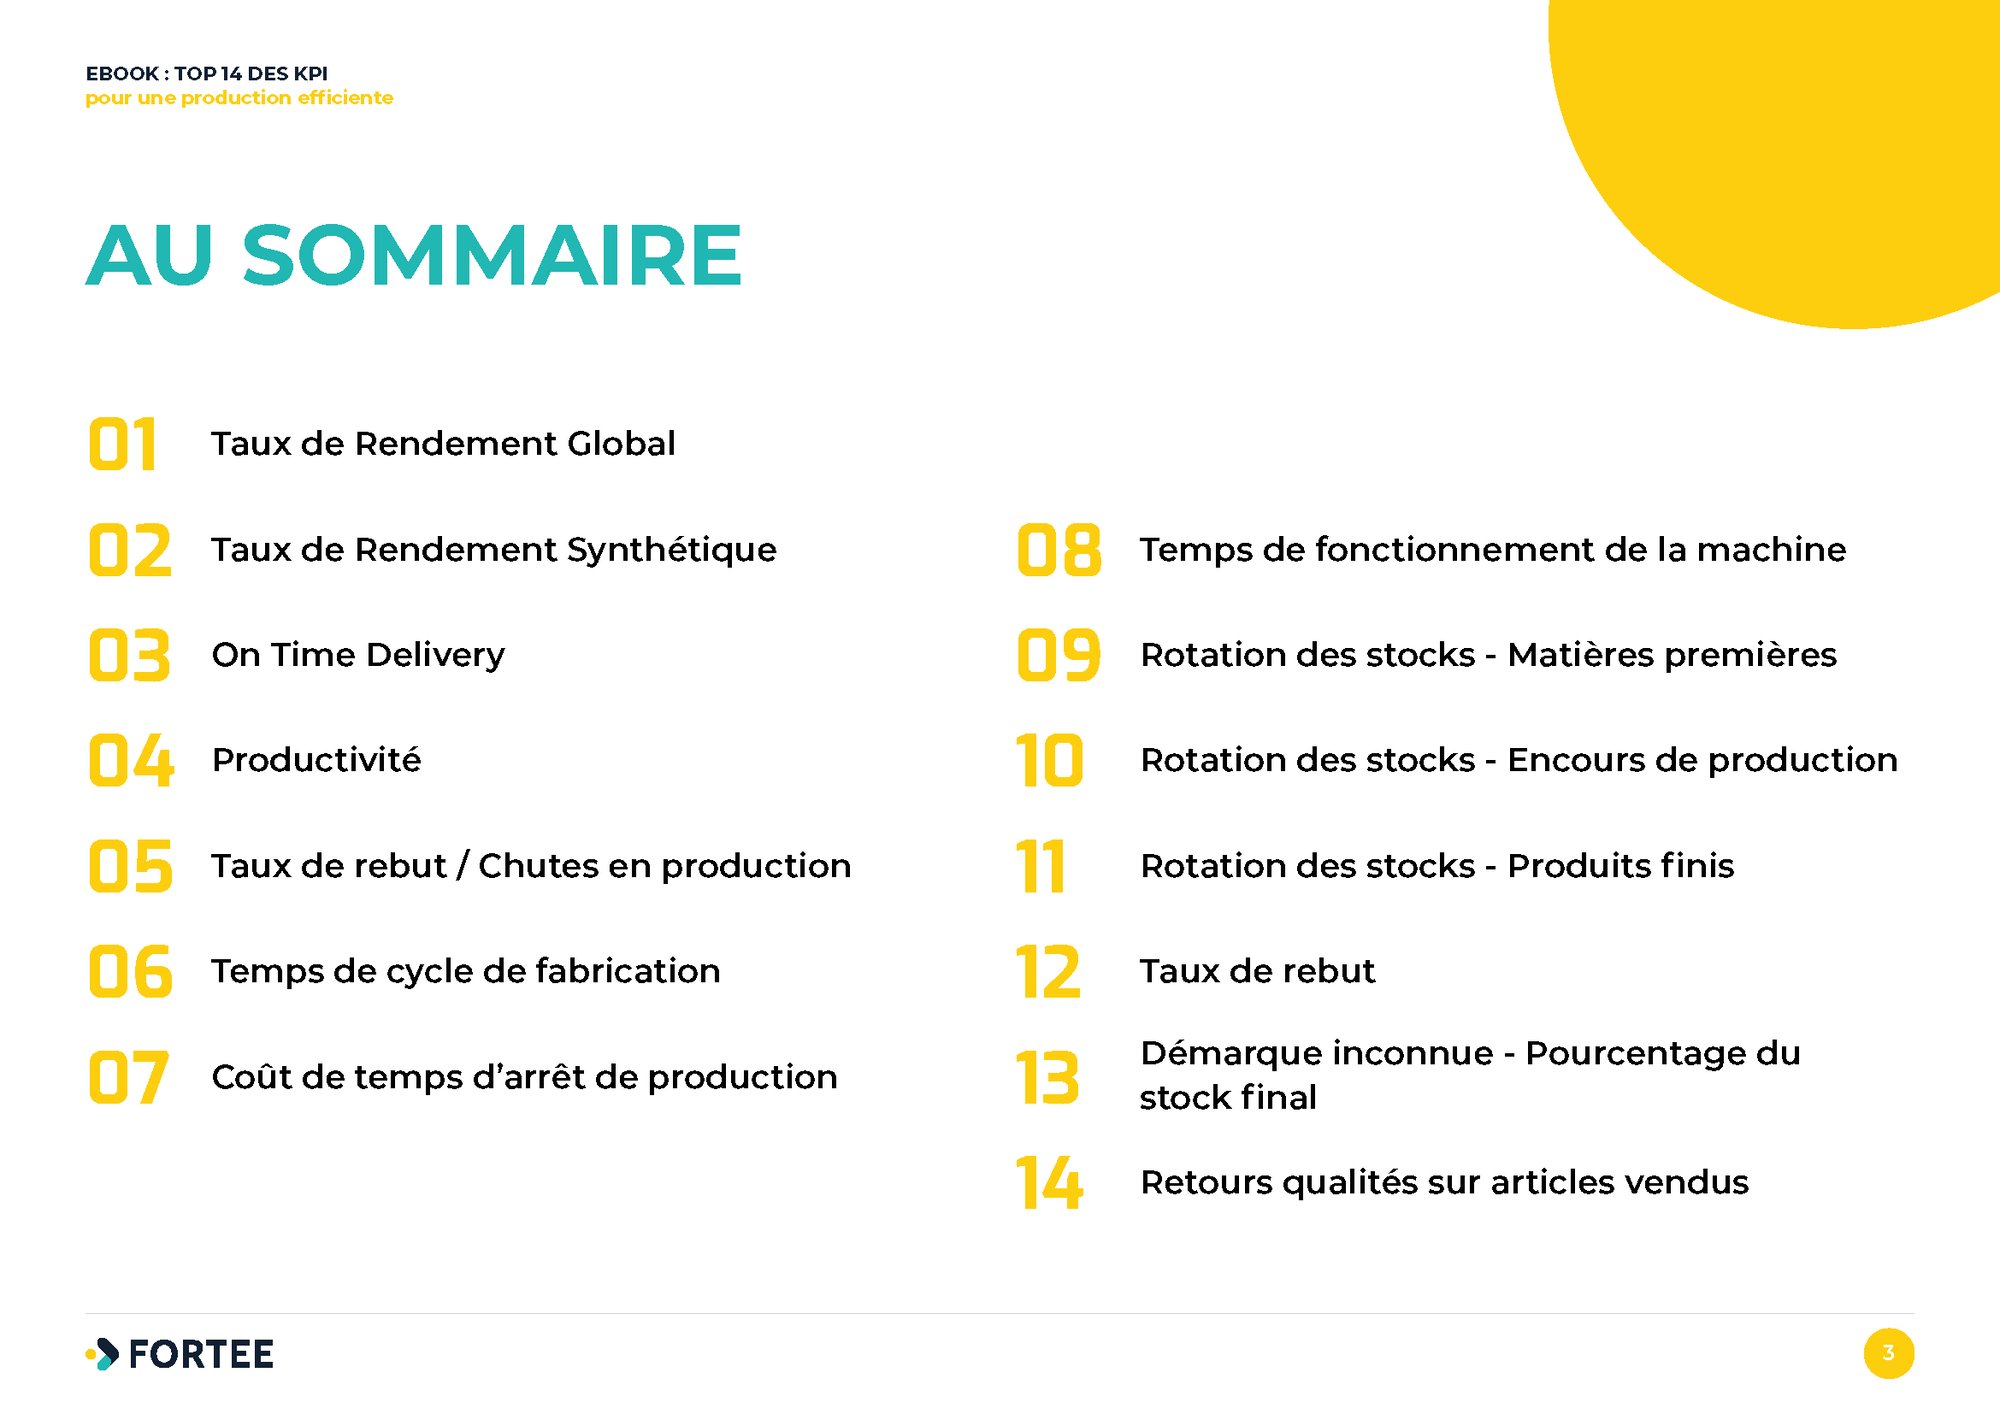 Fortee - Ebook - 14 KPI Production - sommaire